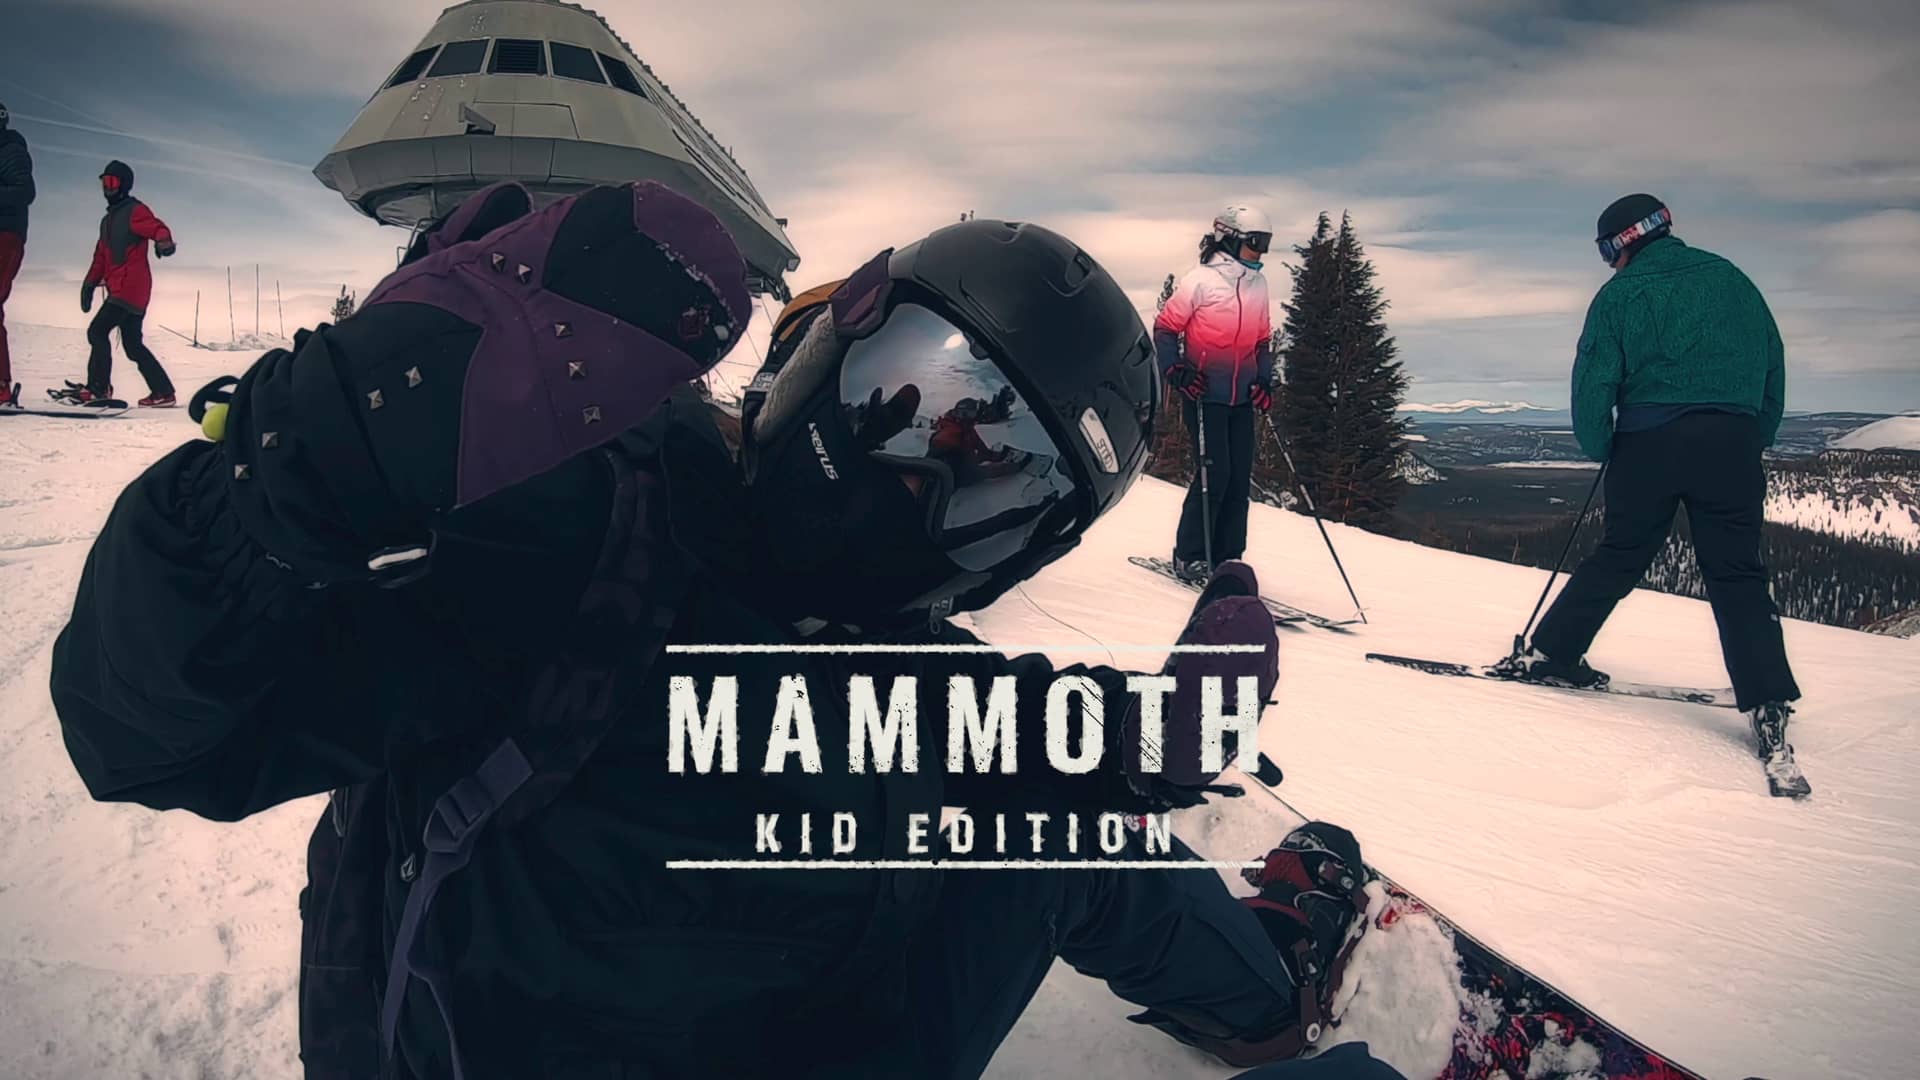 March Mammoth on Vimeo